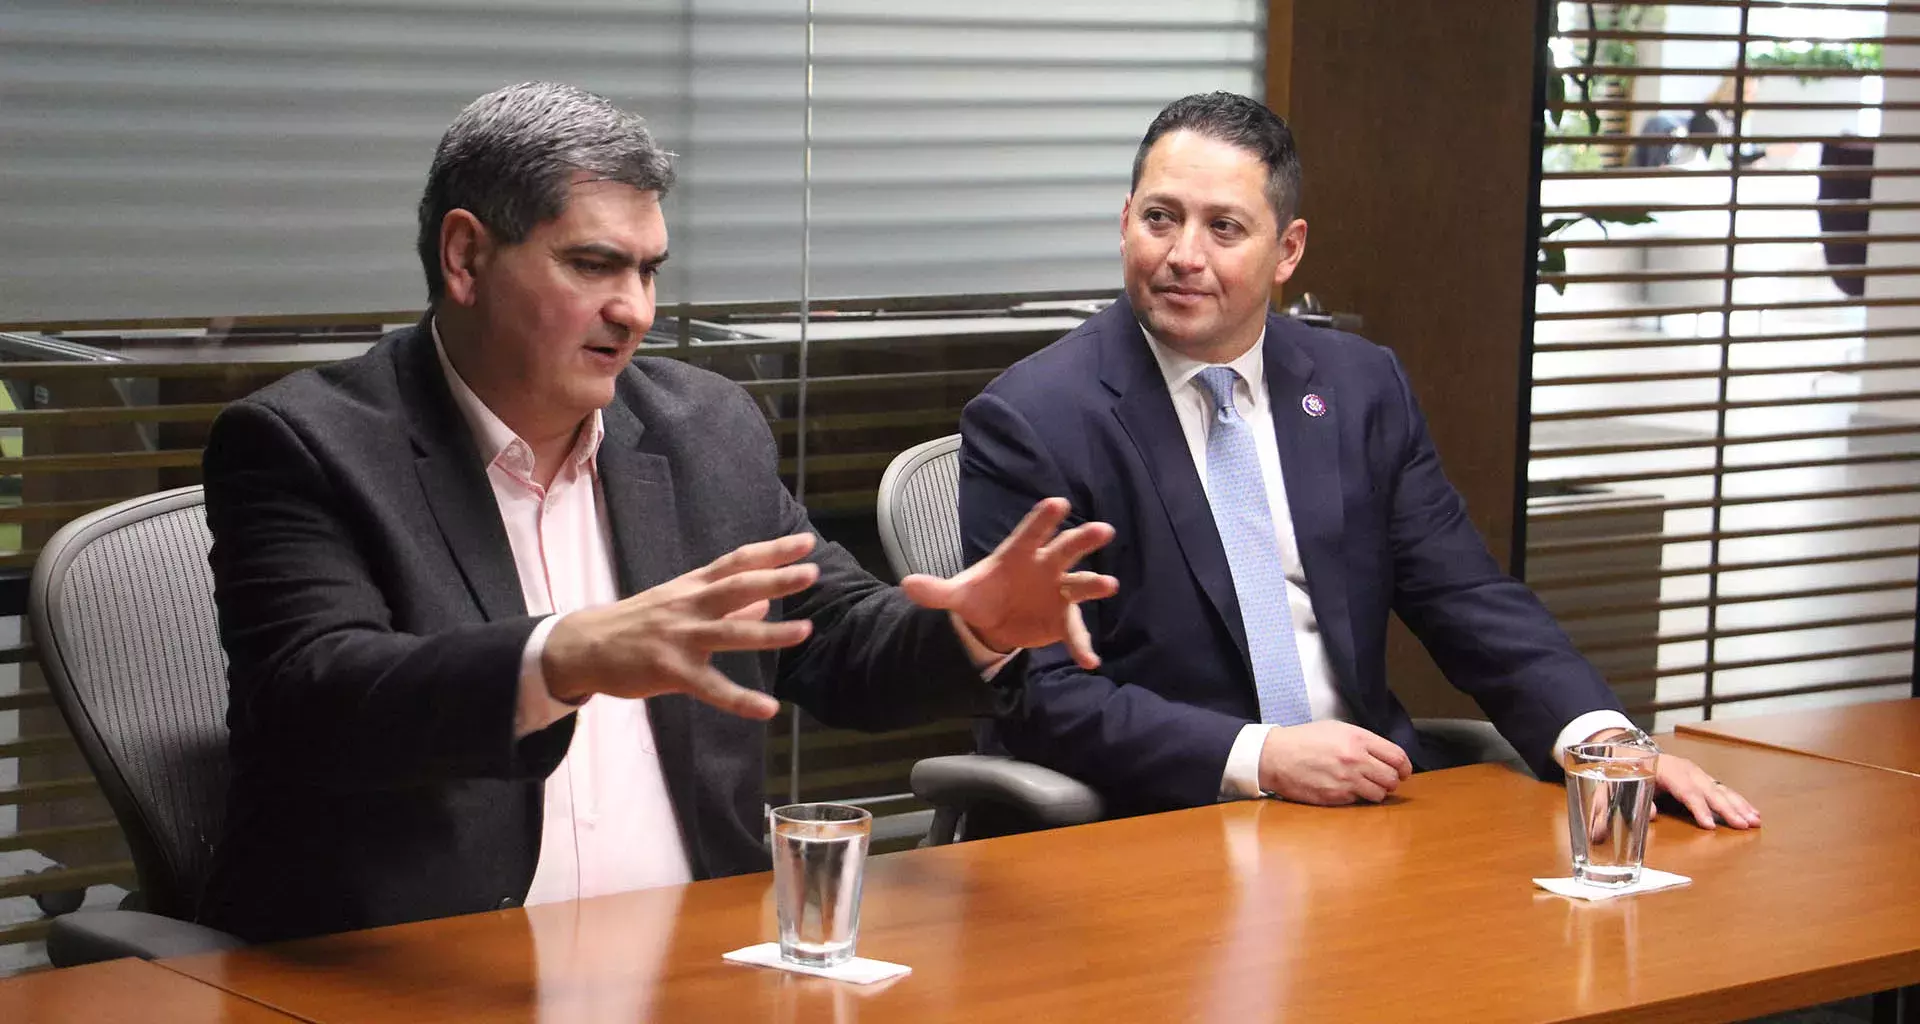 They seek to strengthen Monterrey-San Antonio relations